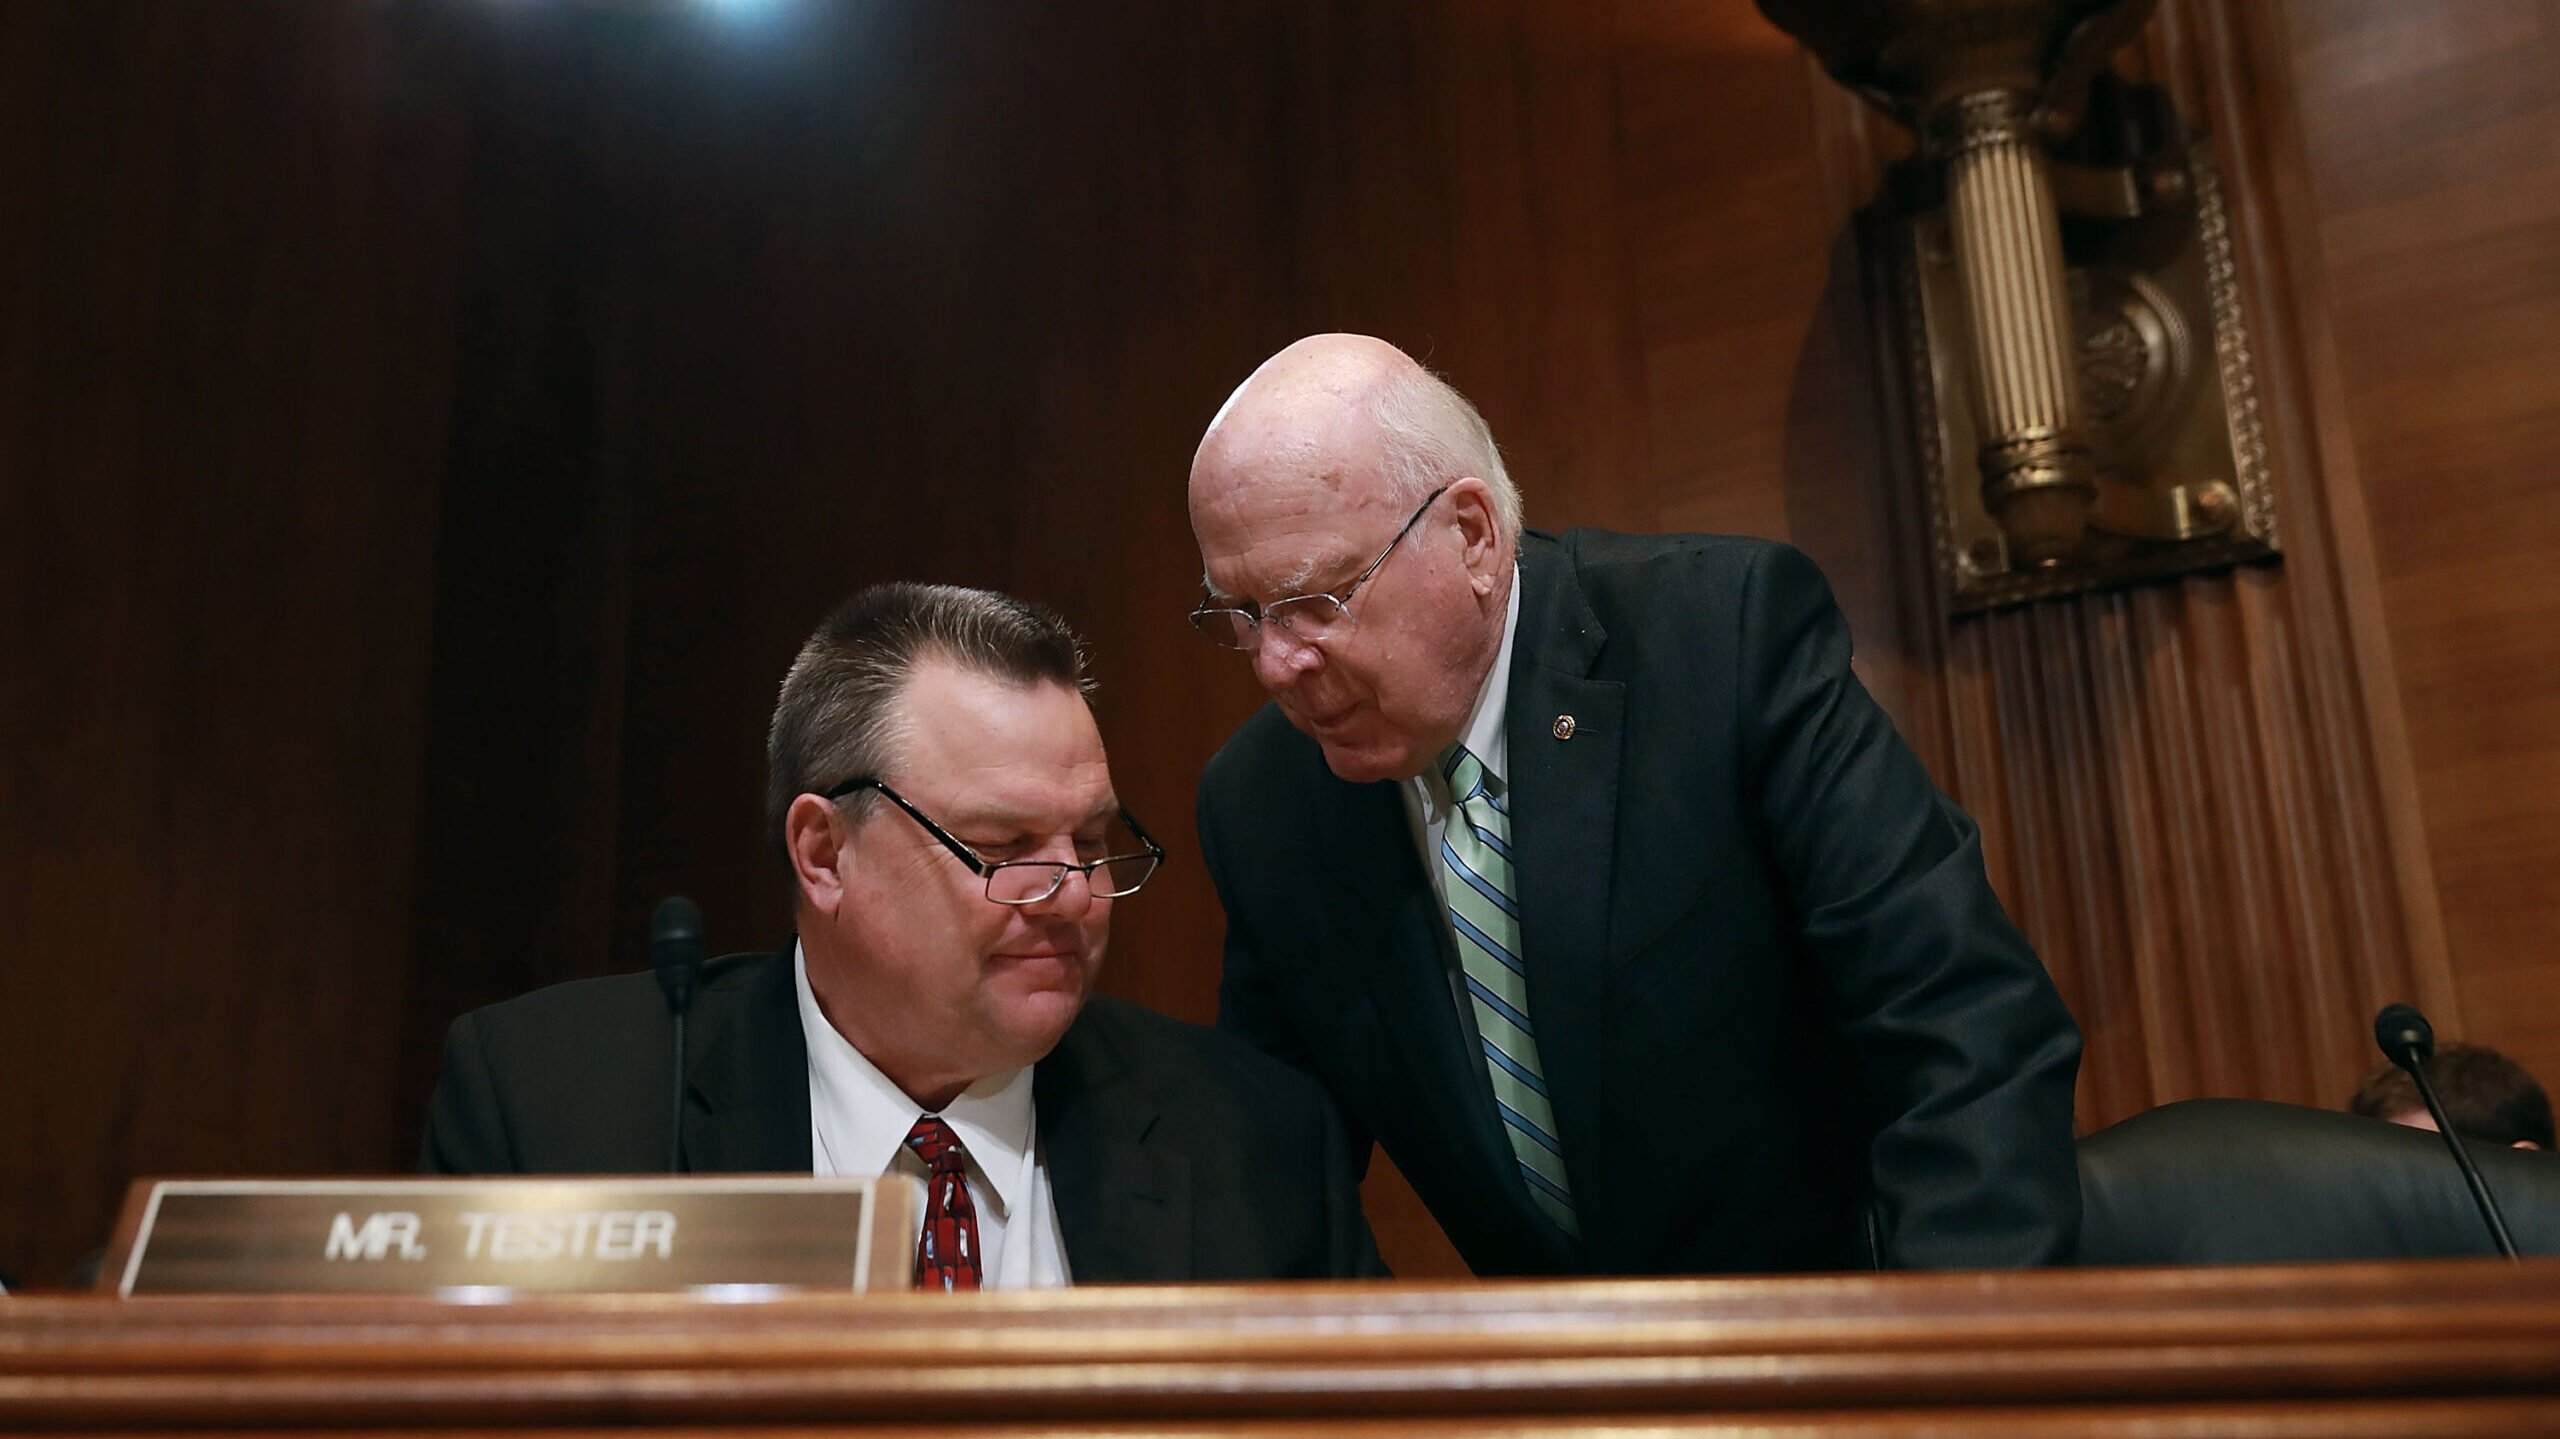 Senate appropriators seek $850 billion for defense, largest total of 4 key committees